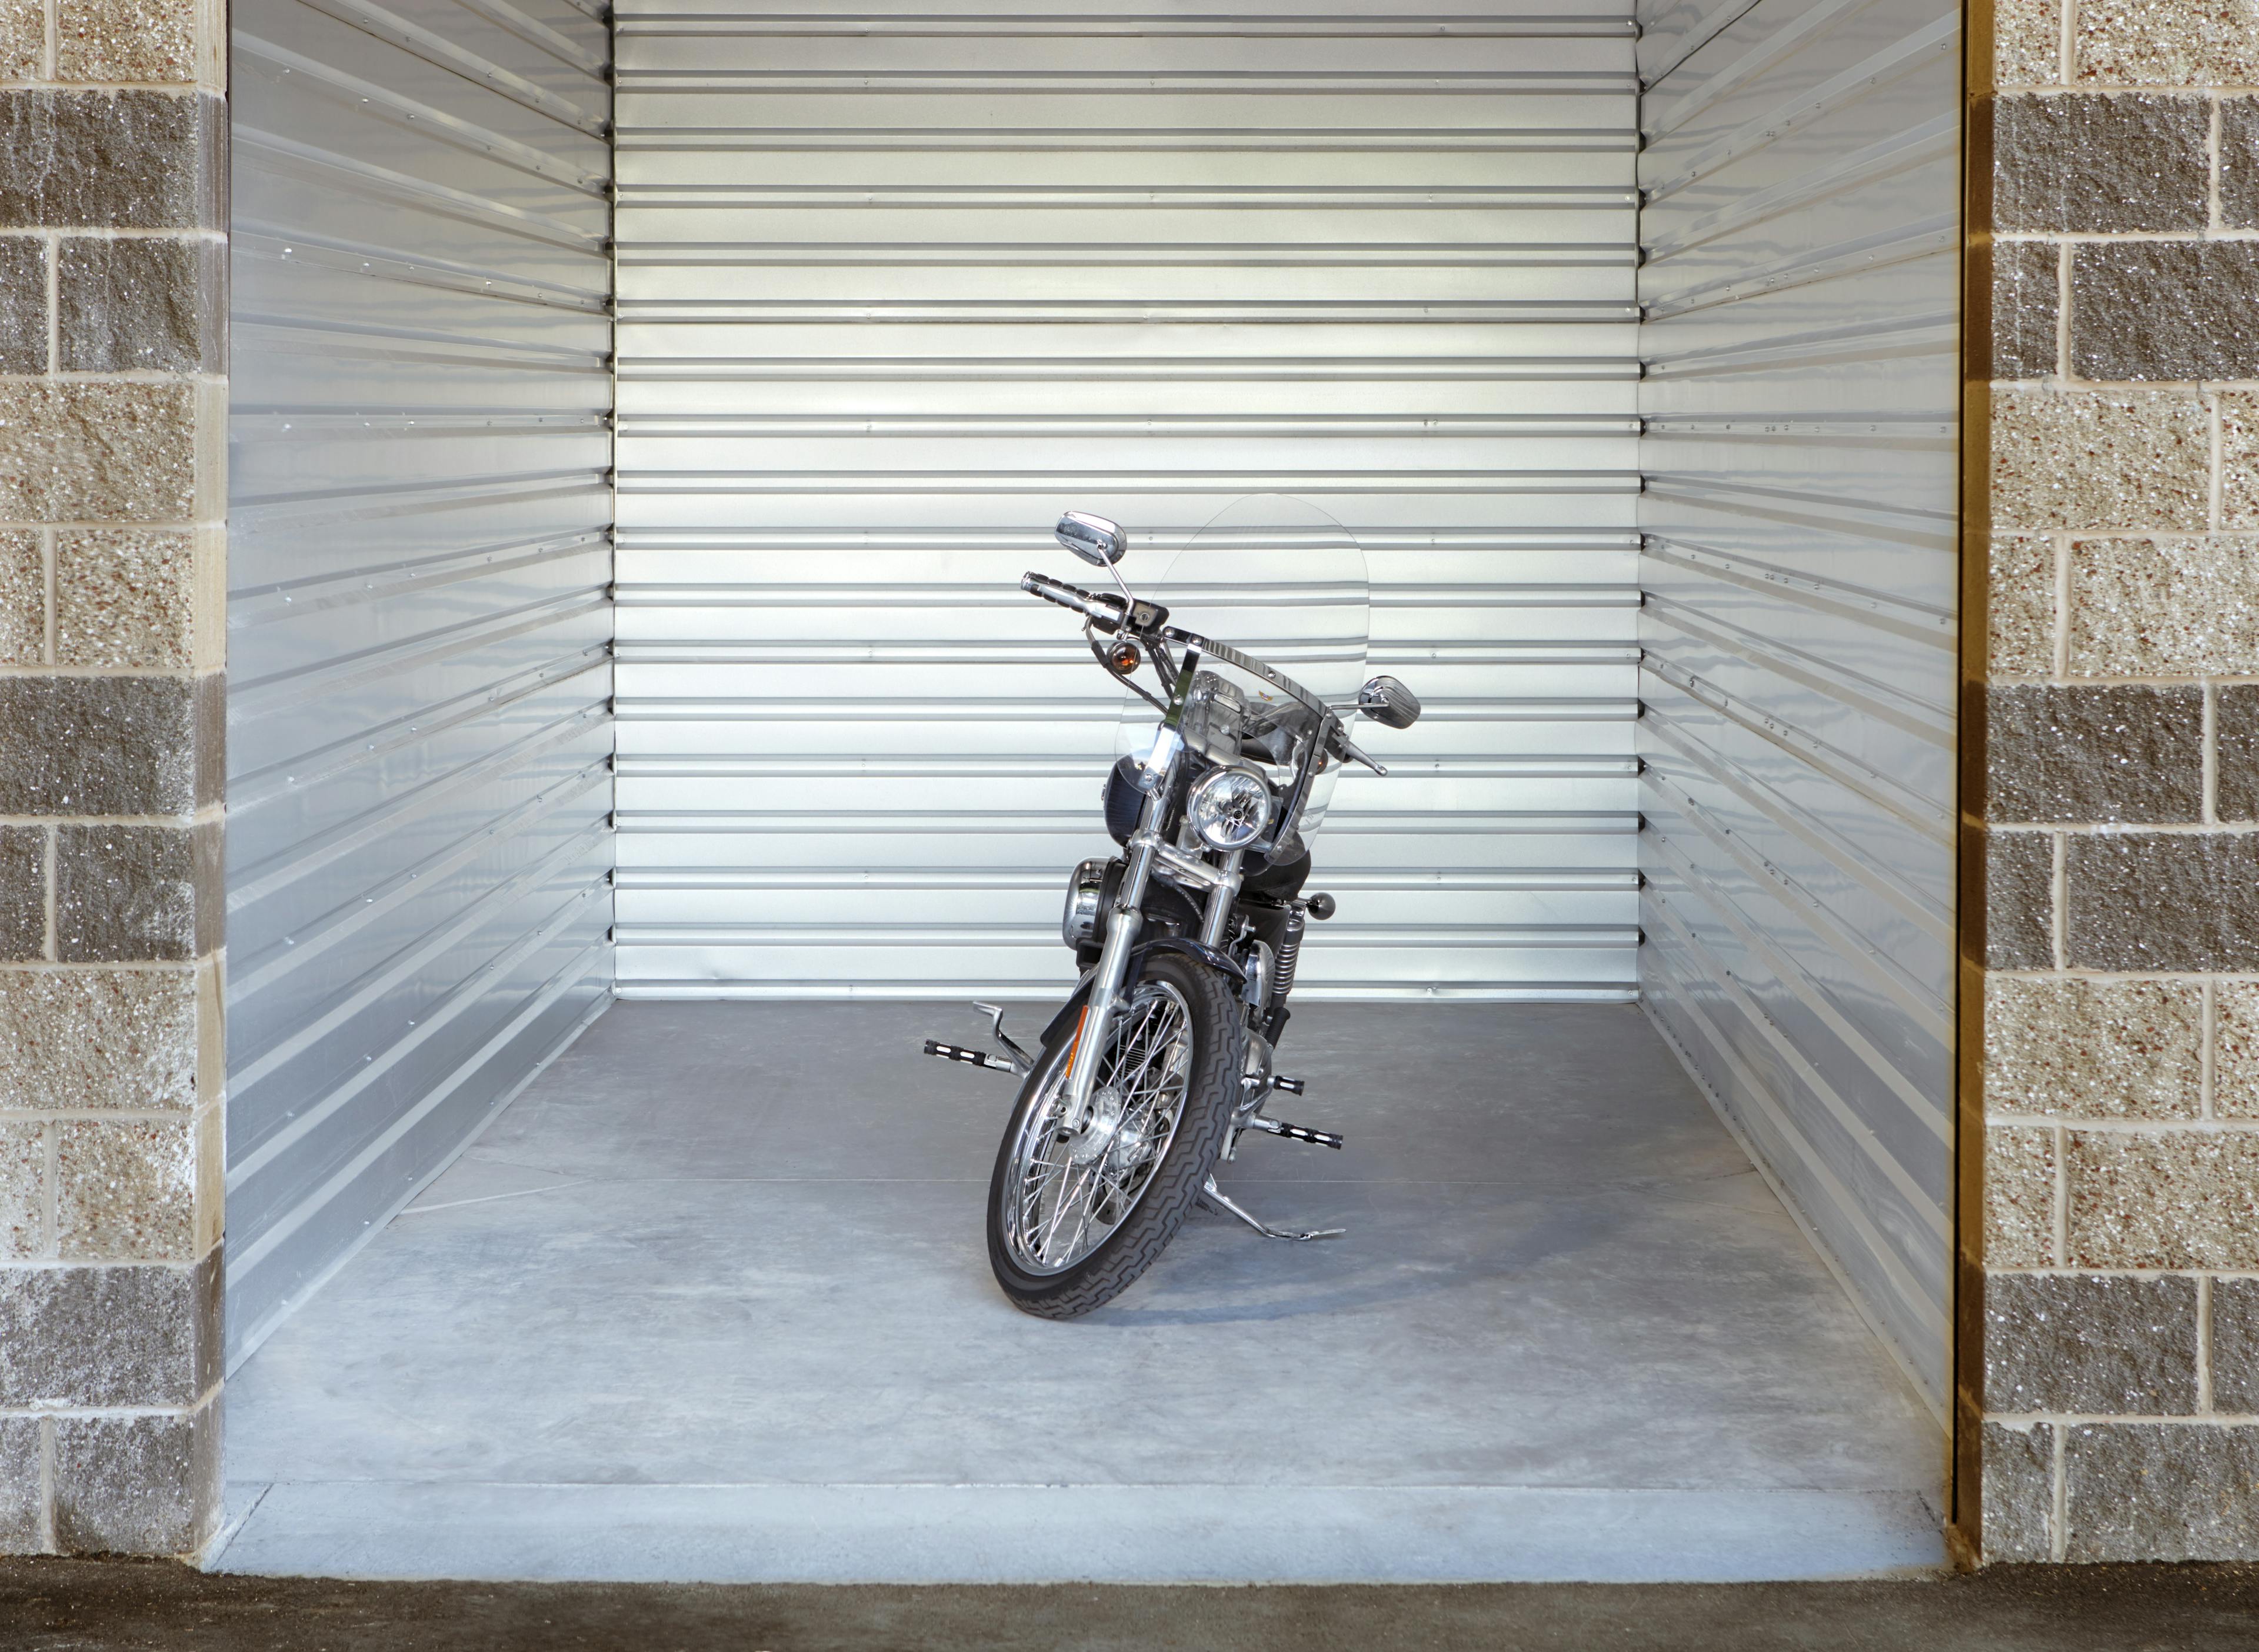 motorcycle-storage